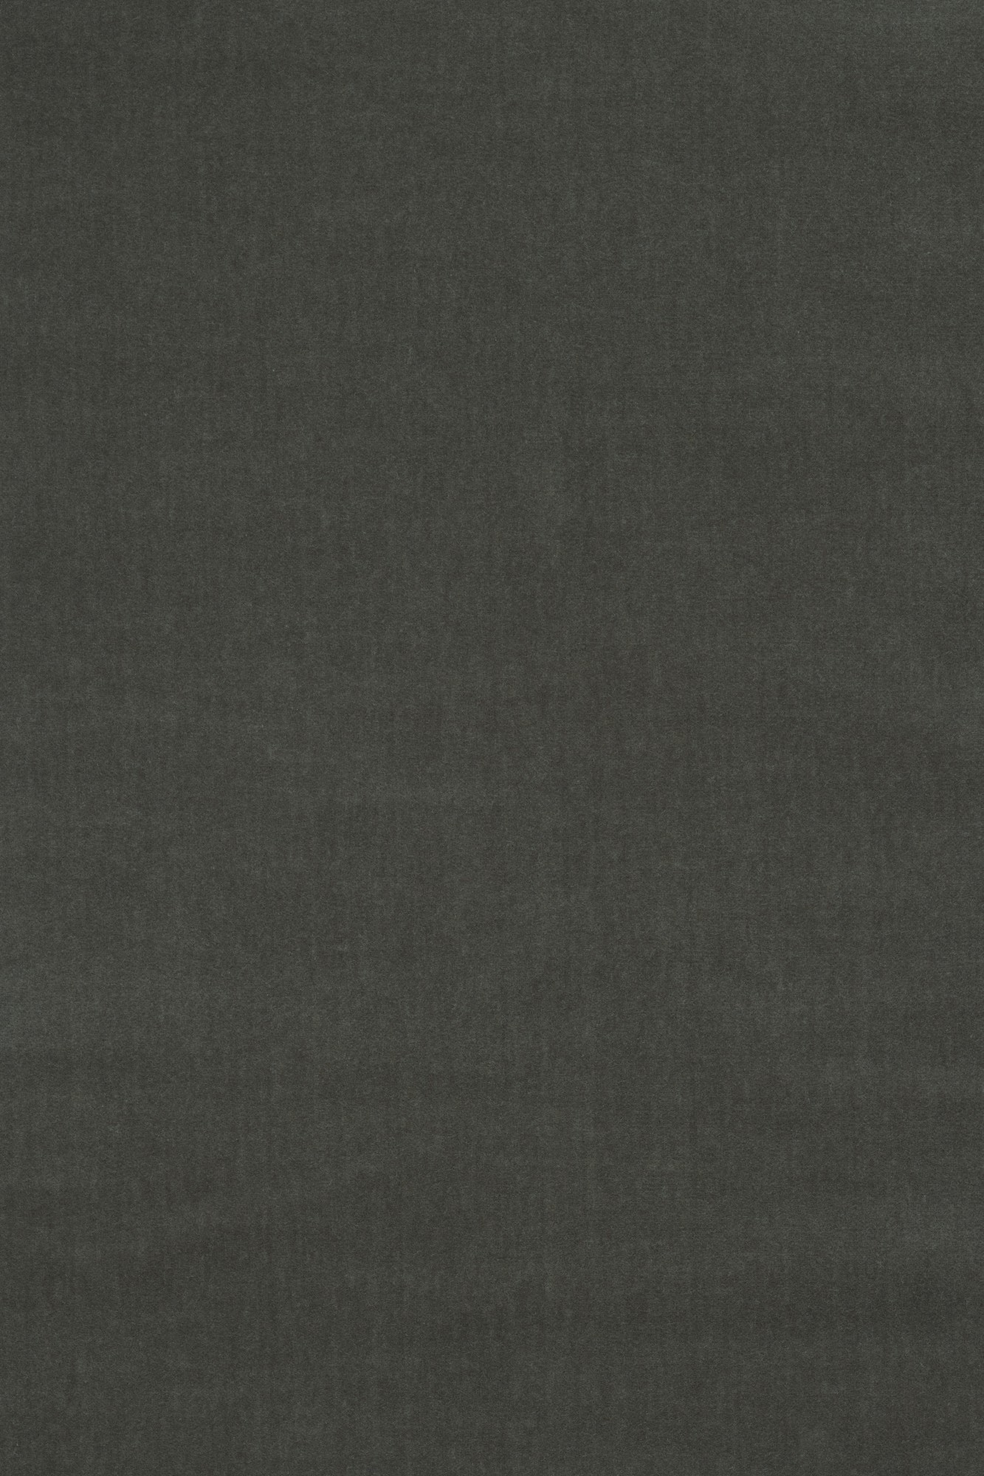 Fabric sample Harald 3 242 grey